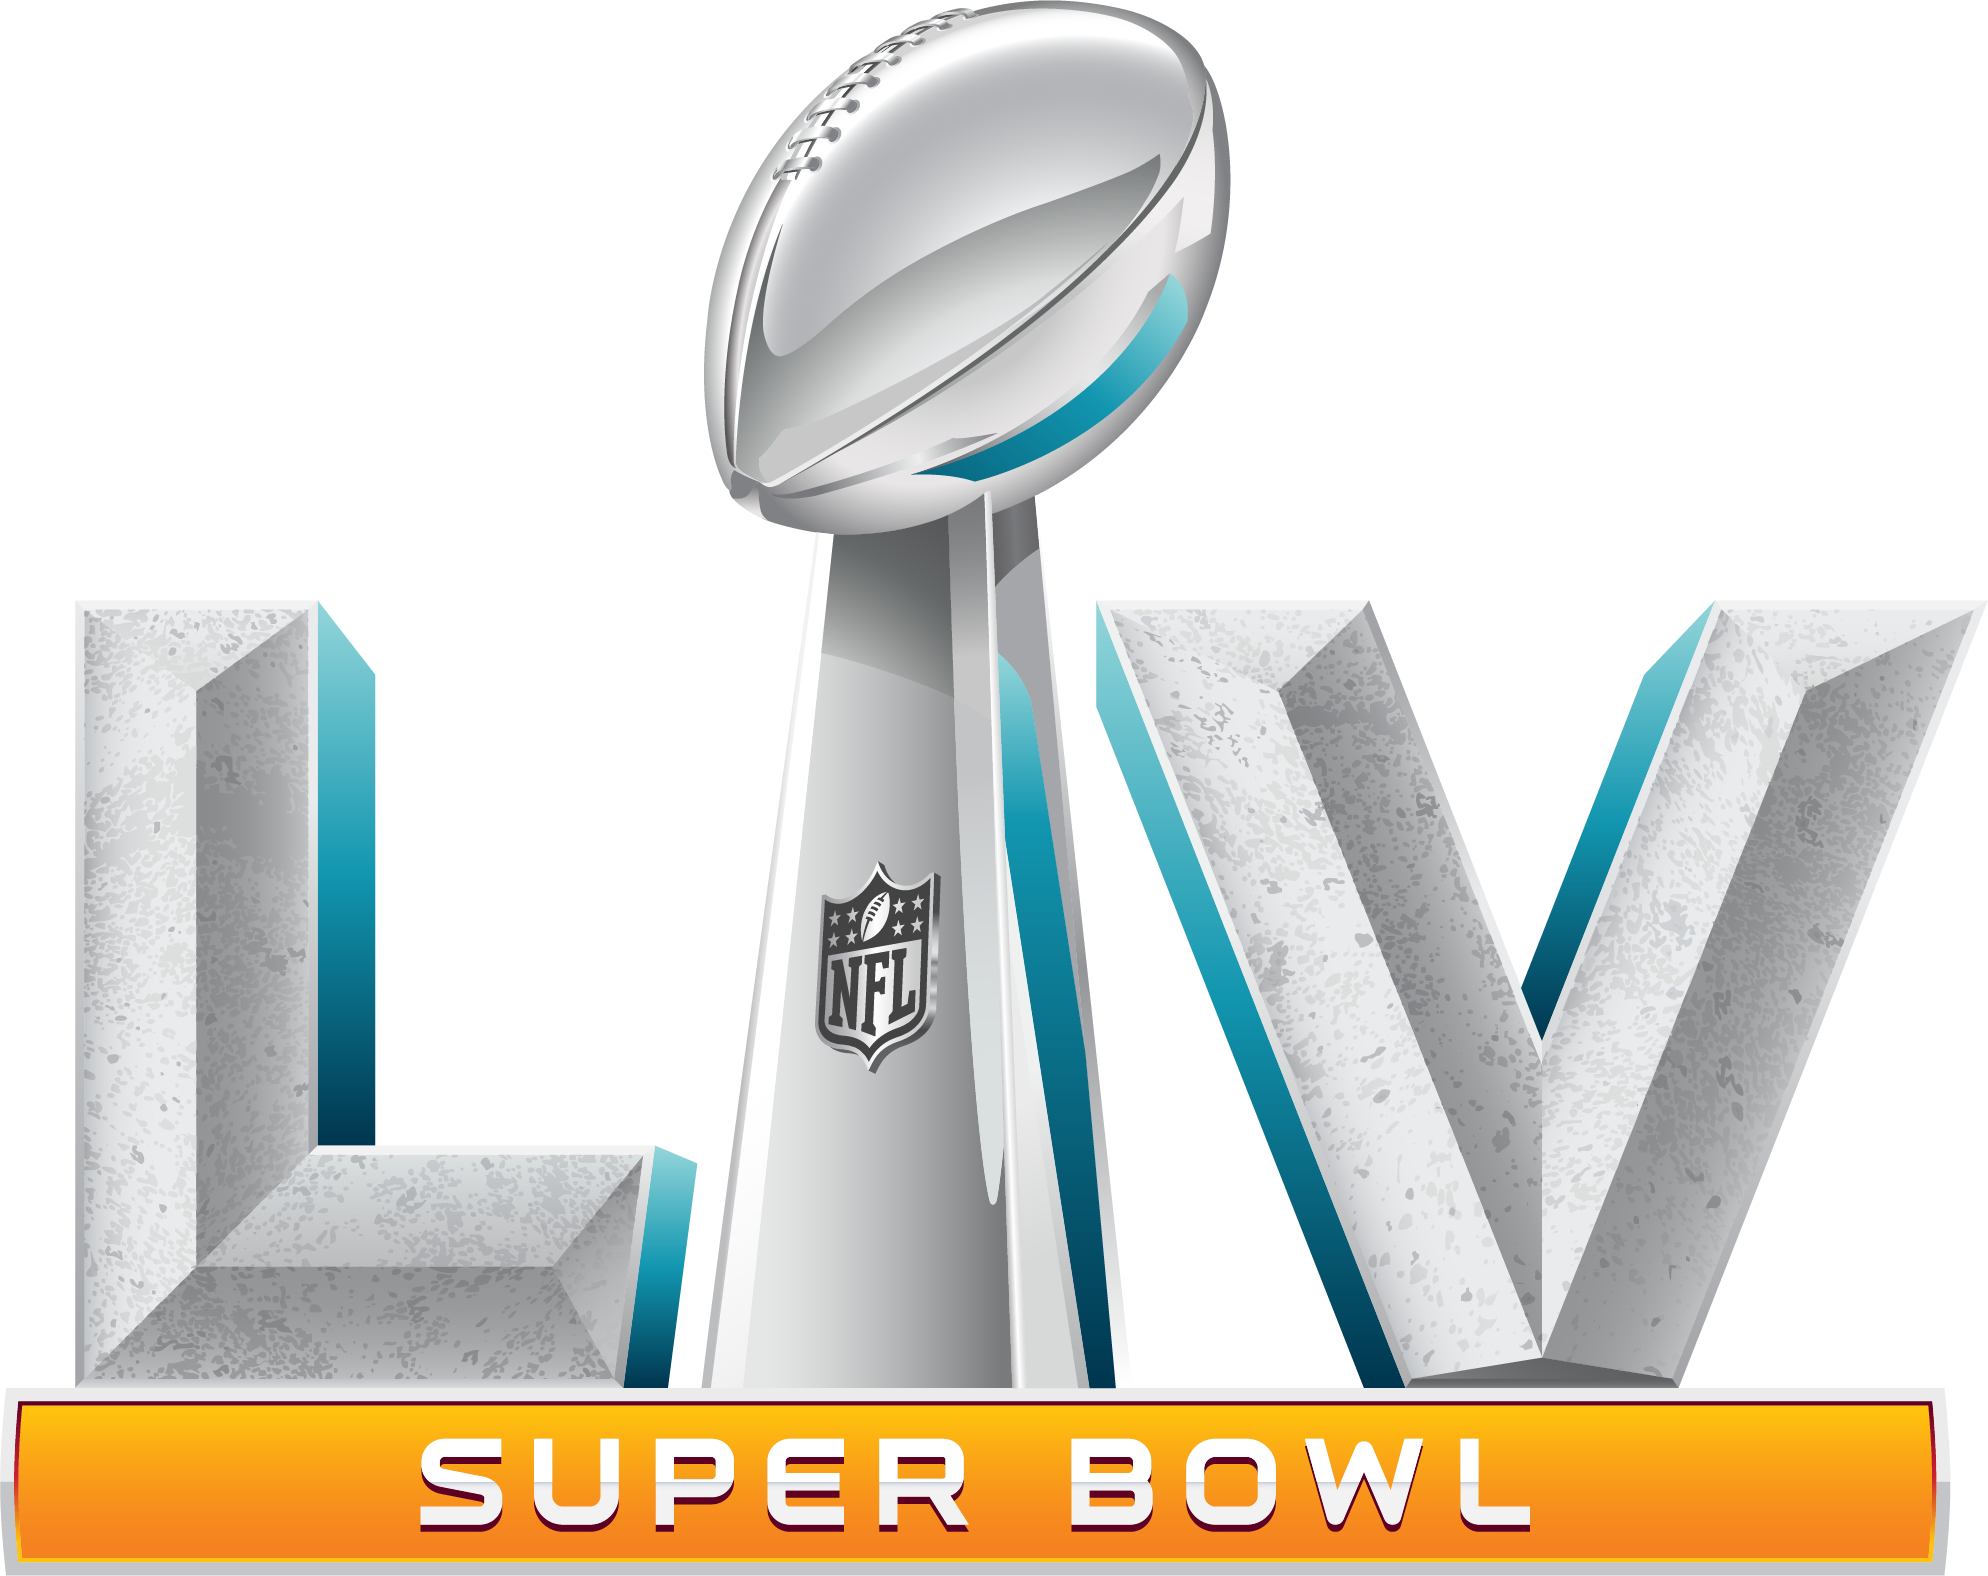 Super Bowl Transparent Image